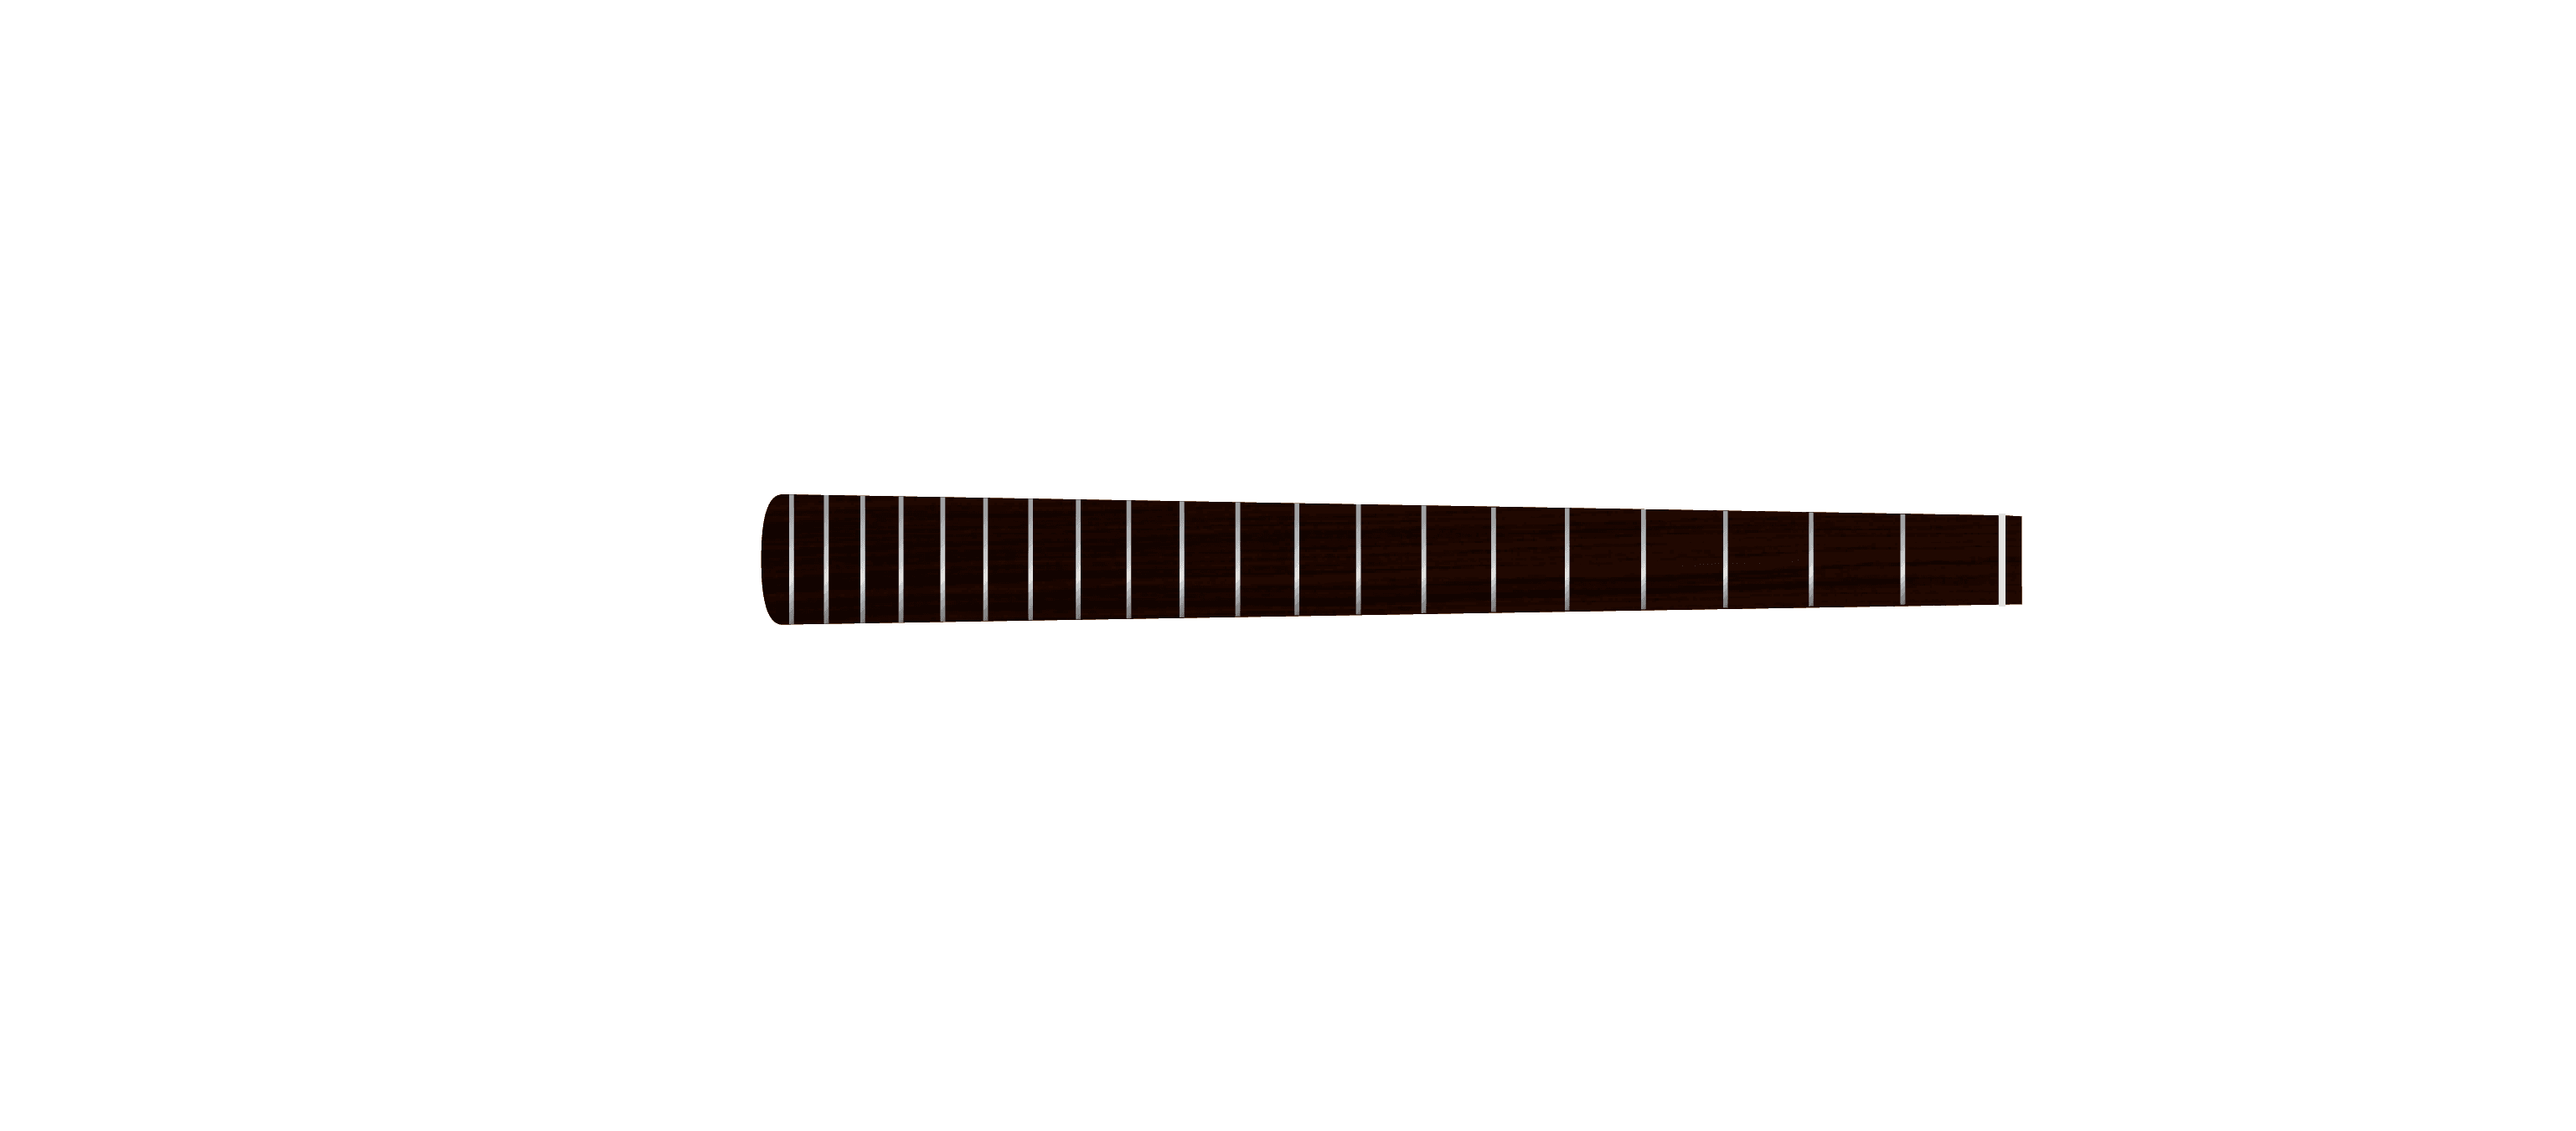 guitar-fretboard